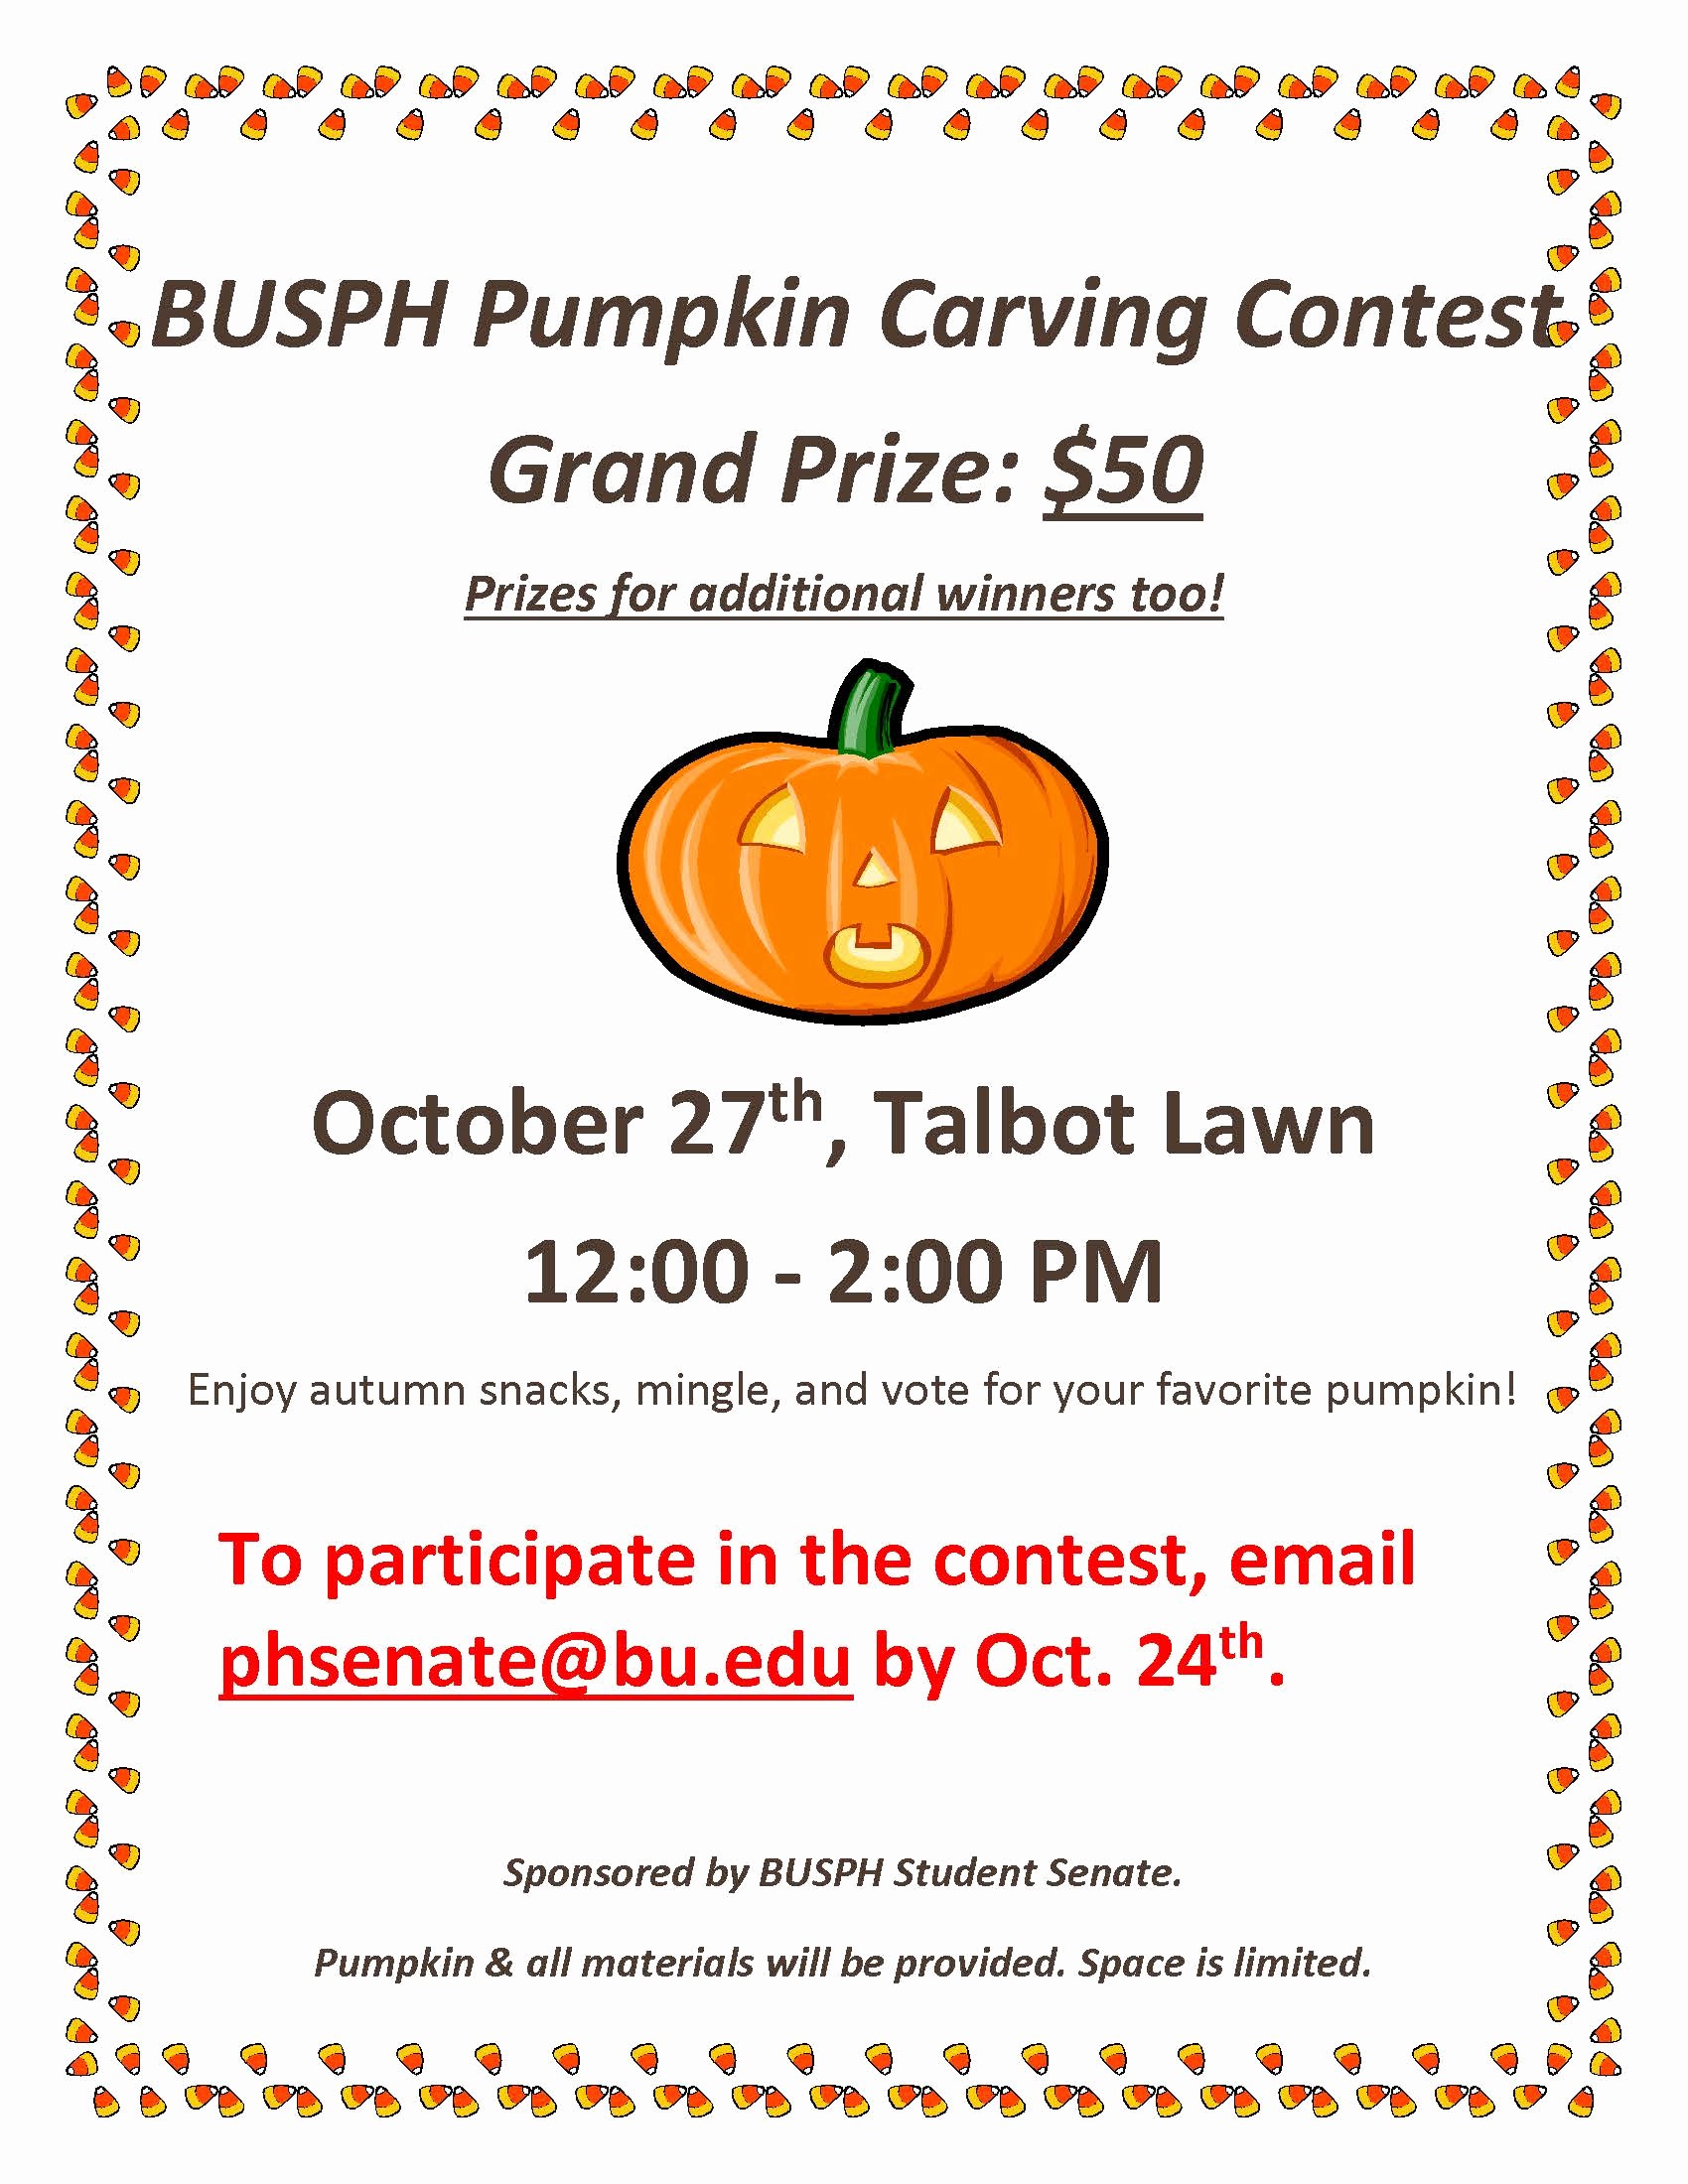 Pumpkin Carving Contest Flyer Template Inspirational Busph Pumpkin Carving Contest – Oct 27th On Talbot Green